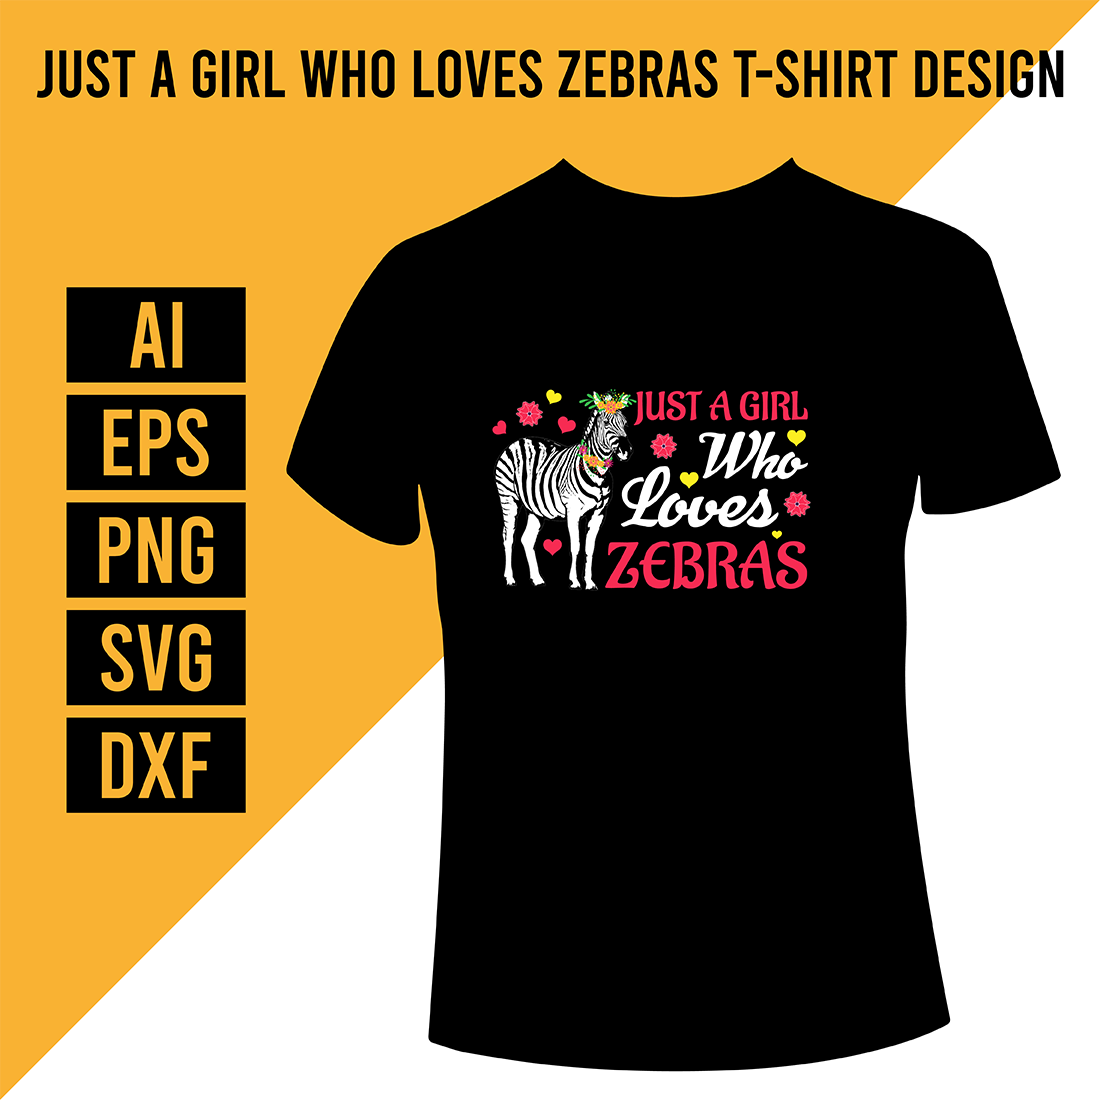 Just A Girl Who Loves Zebras T-Shirt Design cover image.